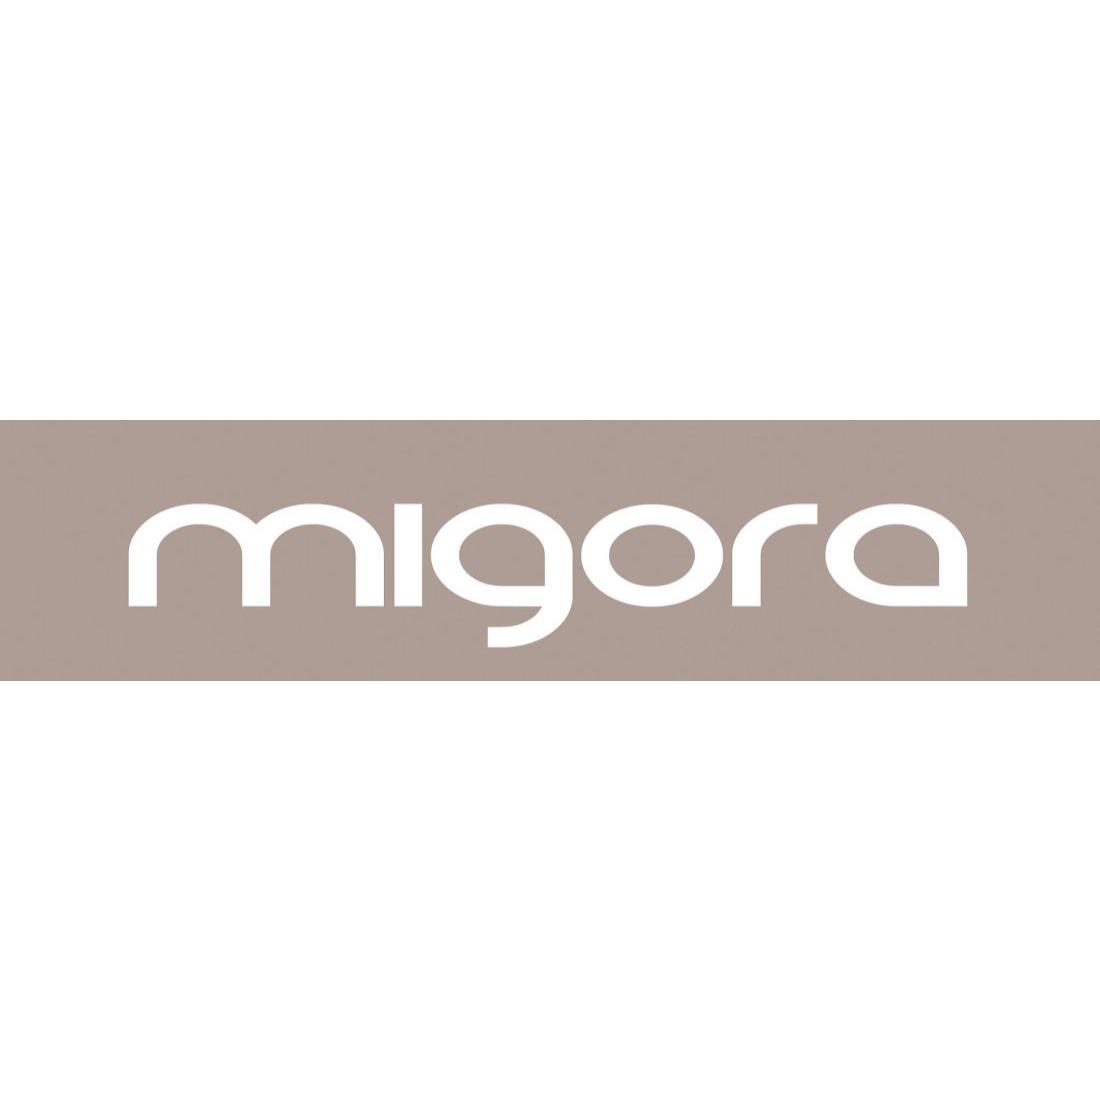 Migora Möbel Parkett Logo